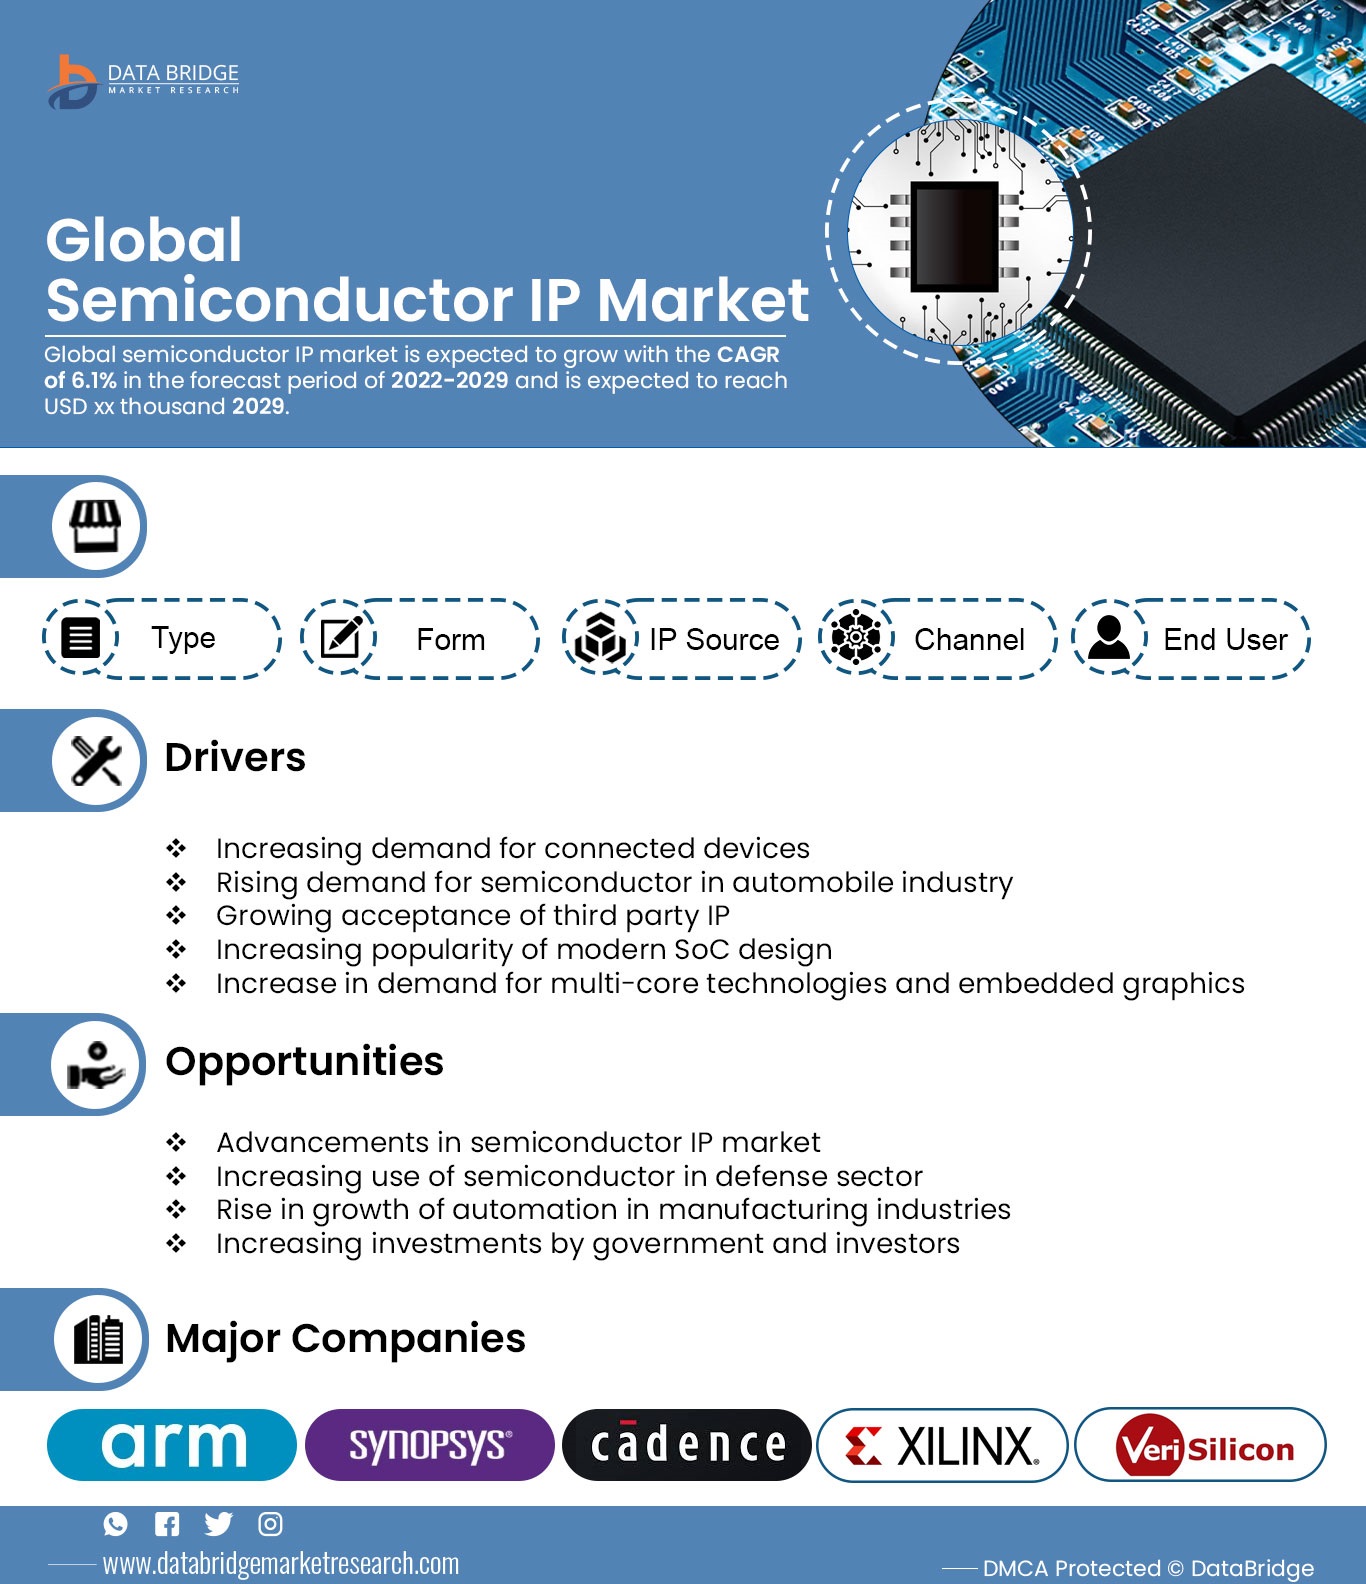 Semiconductor IP Market